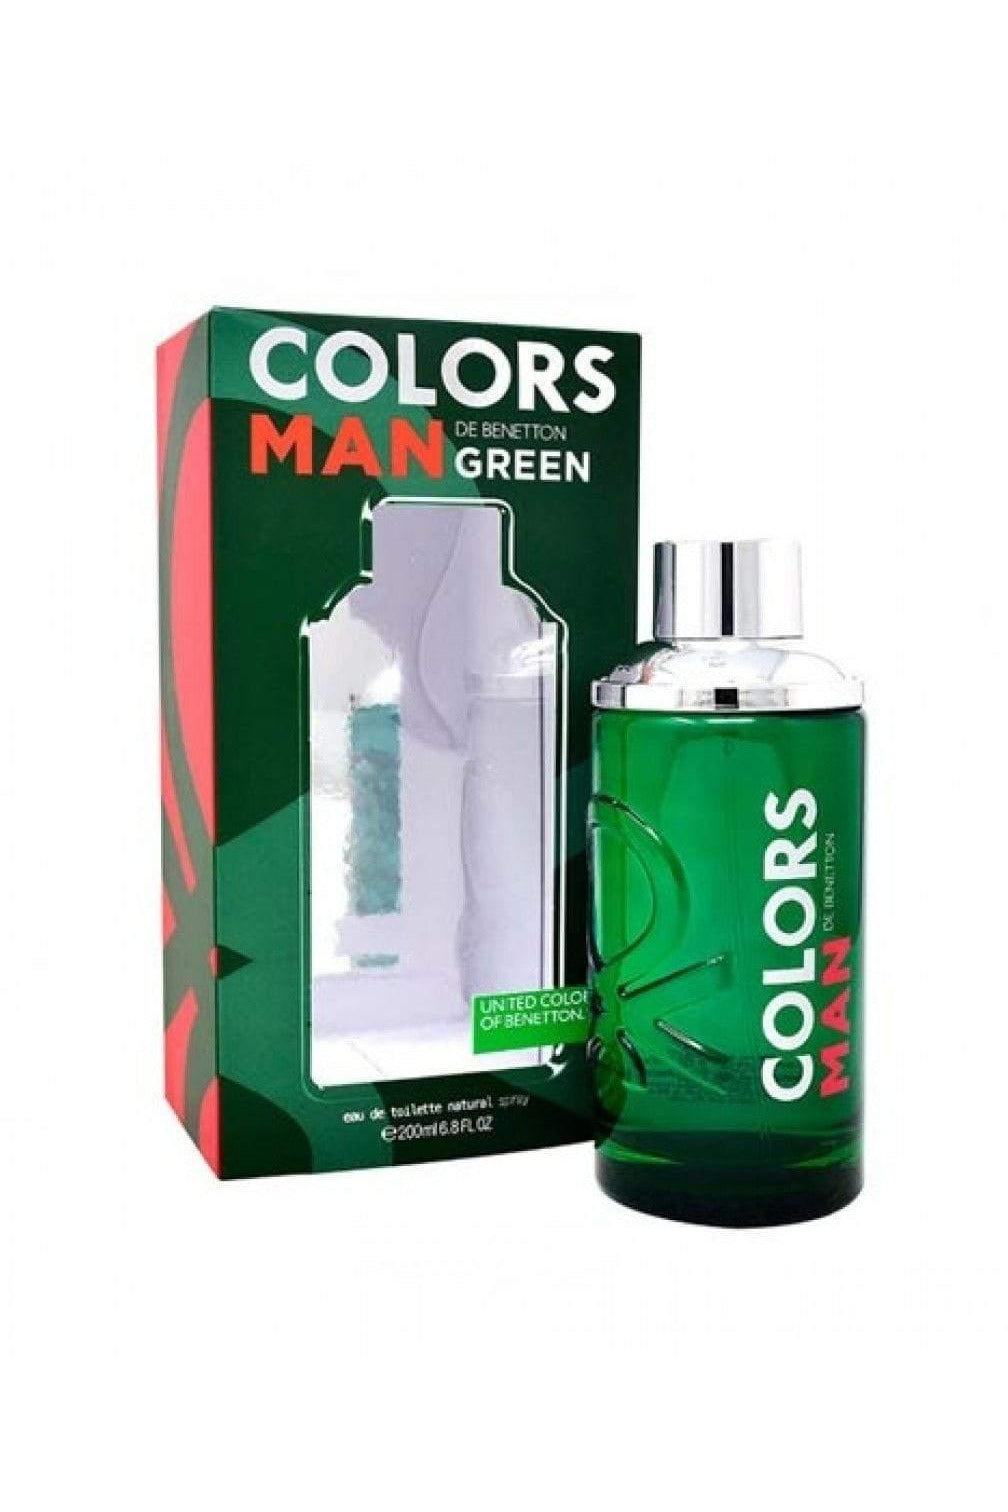 Buy Benetton Colors Man Green EDT - 100ml in Pakistan